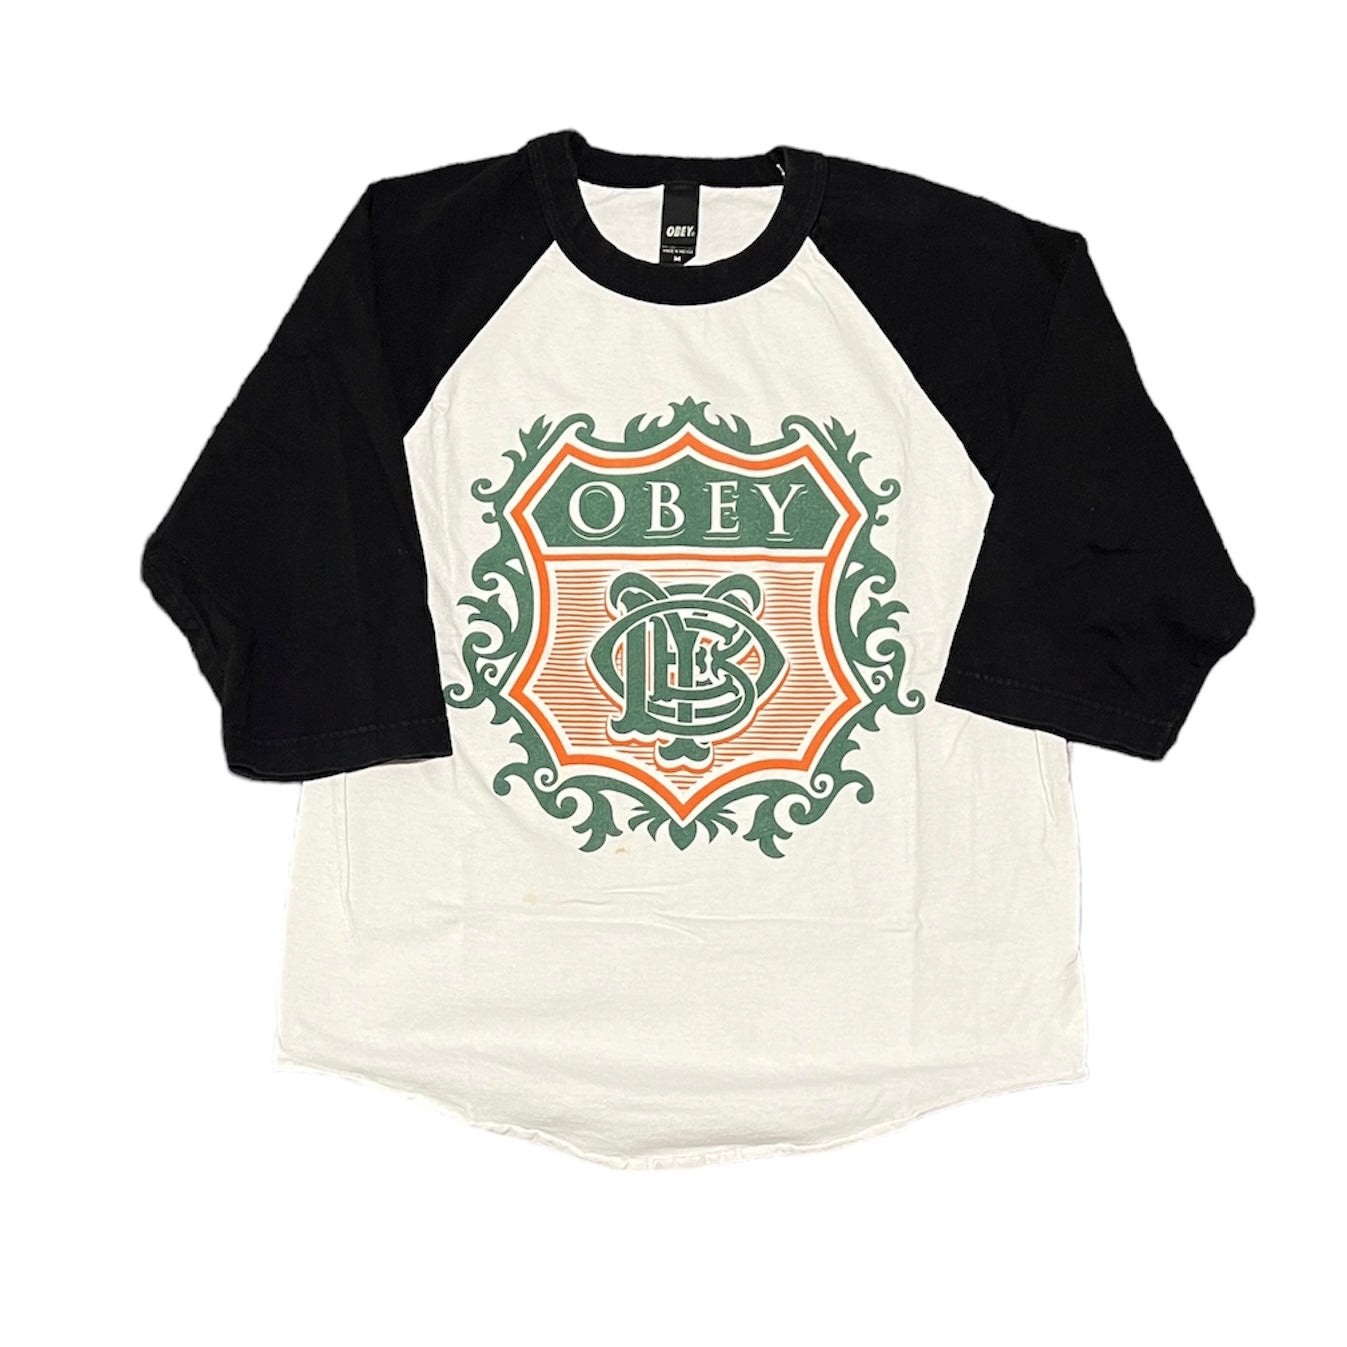 Obey Baseball Sleeve T-Shirt Size Medium